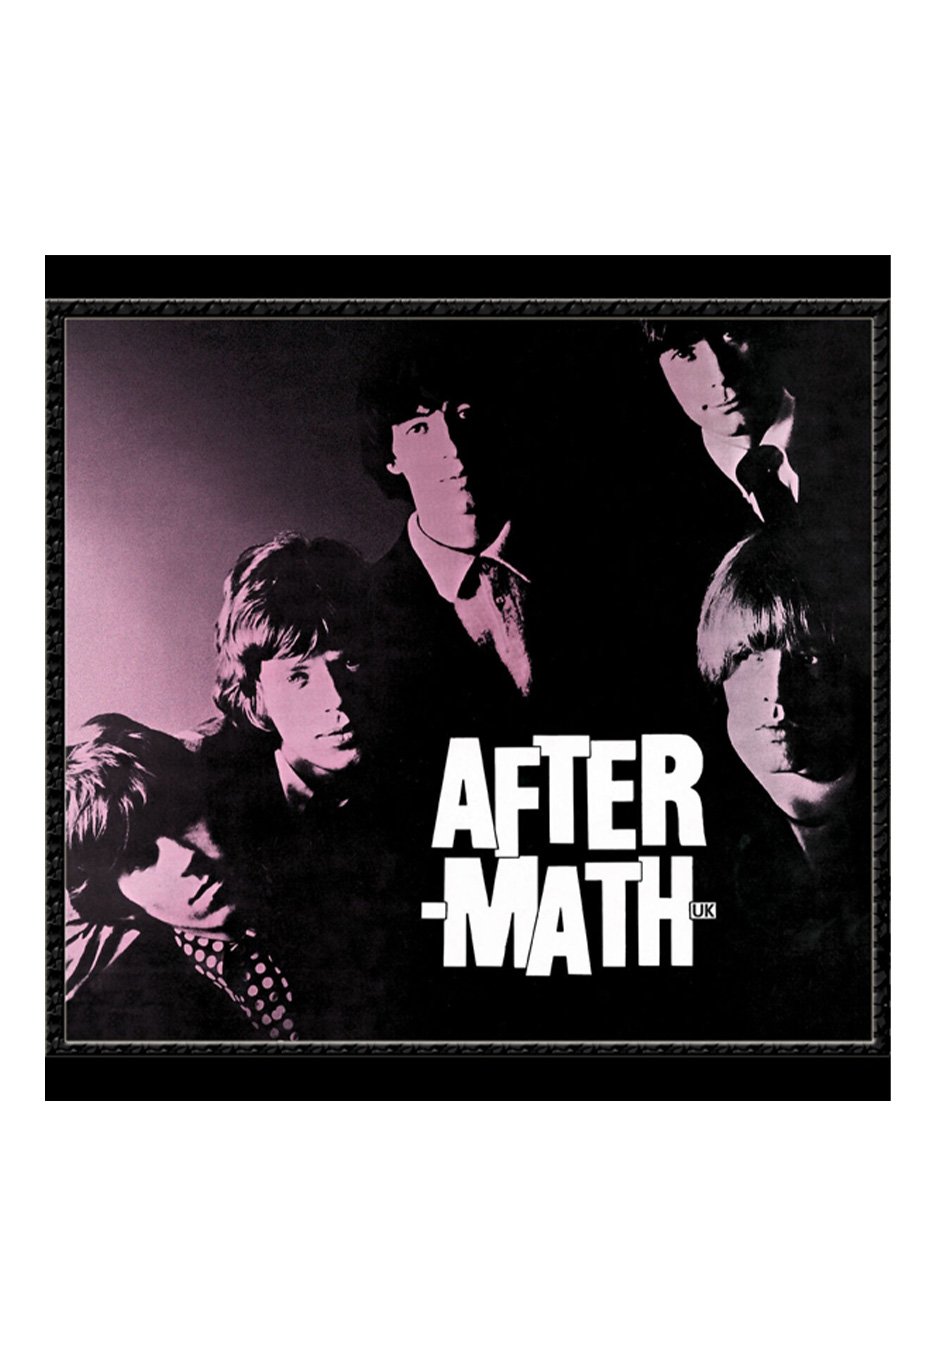 The Rolling Stones - Aftermath (UK Version) - Vinyl